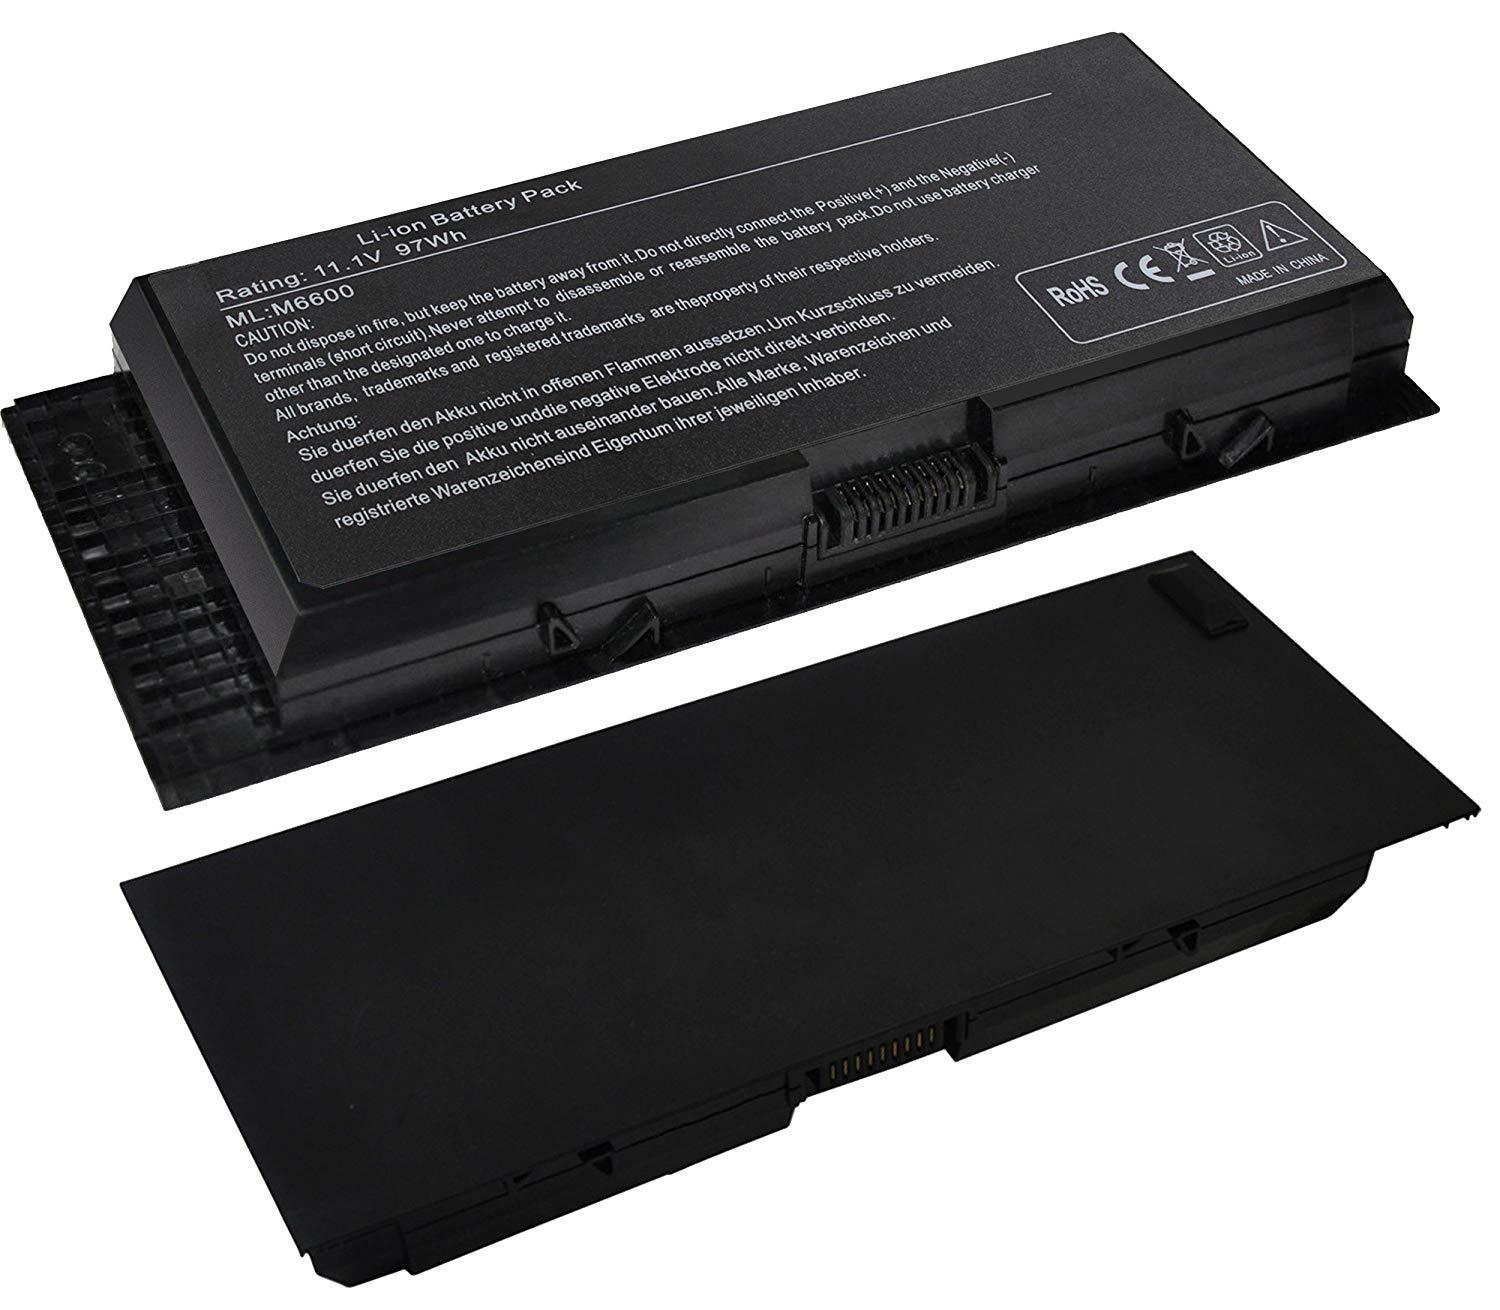 Dell Precision M4600 Laptop Battery - eBuy UAE